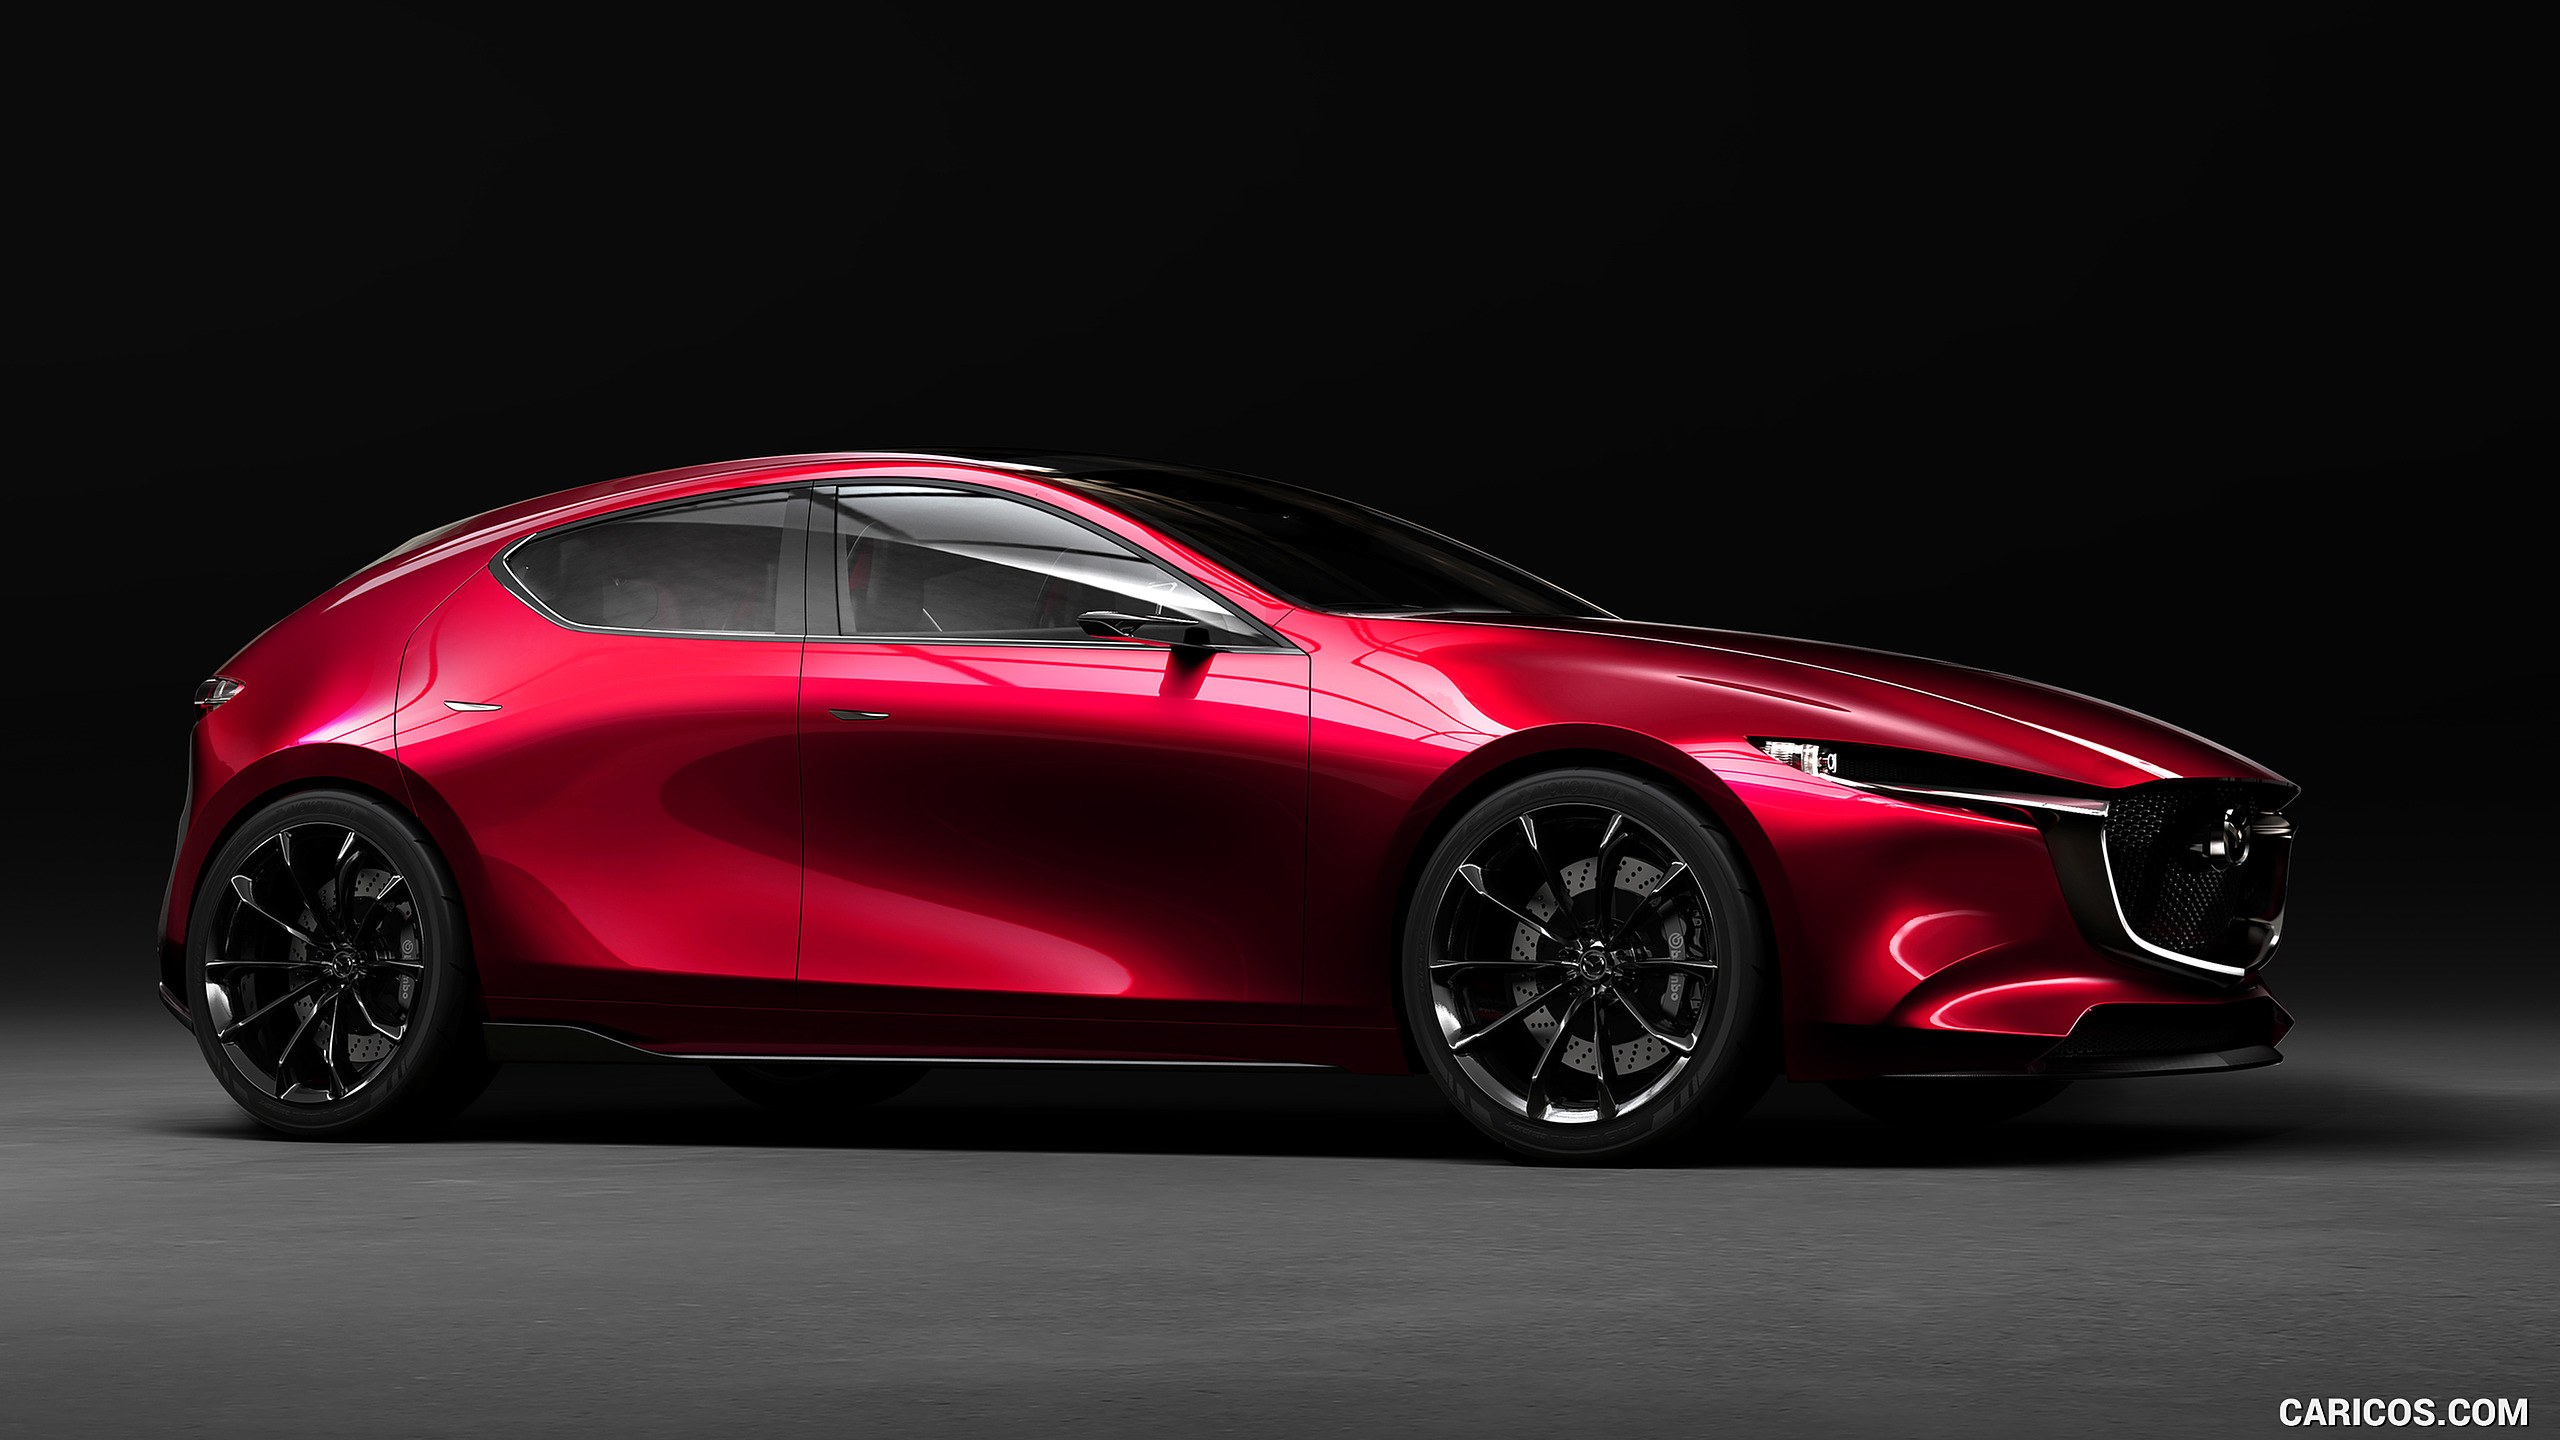 2017 Mazda KAI Concept - Side, #7 of 13